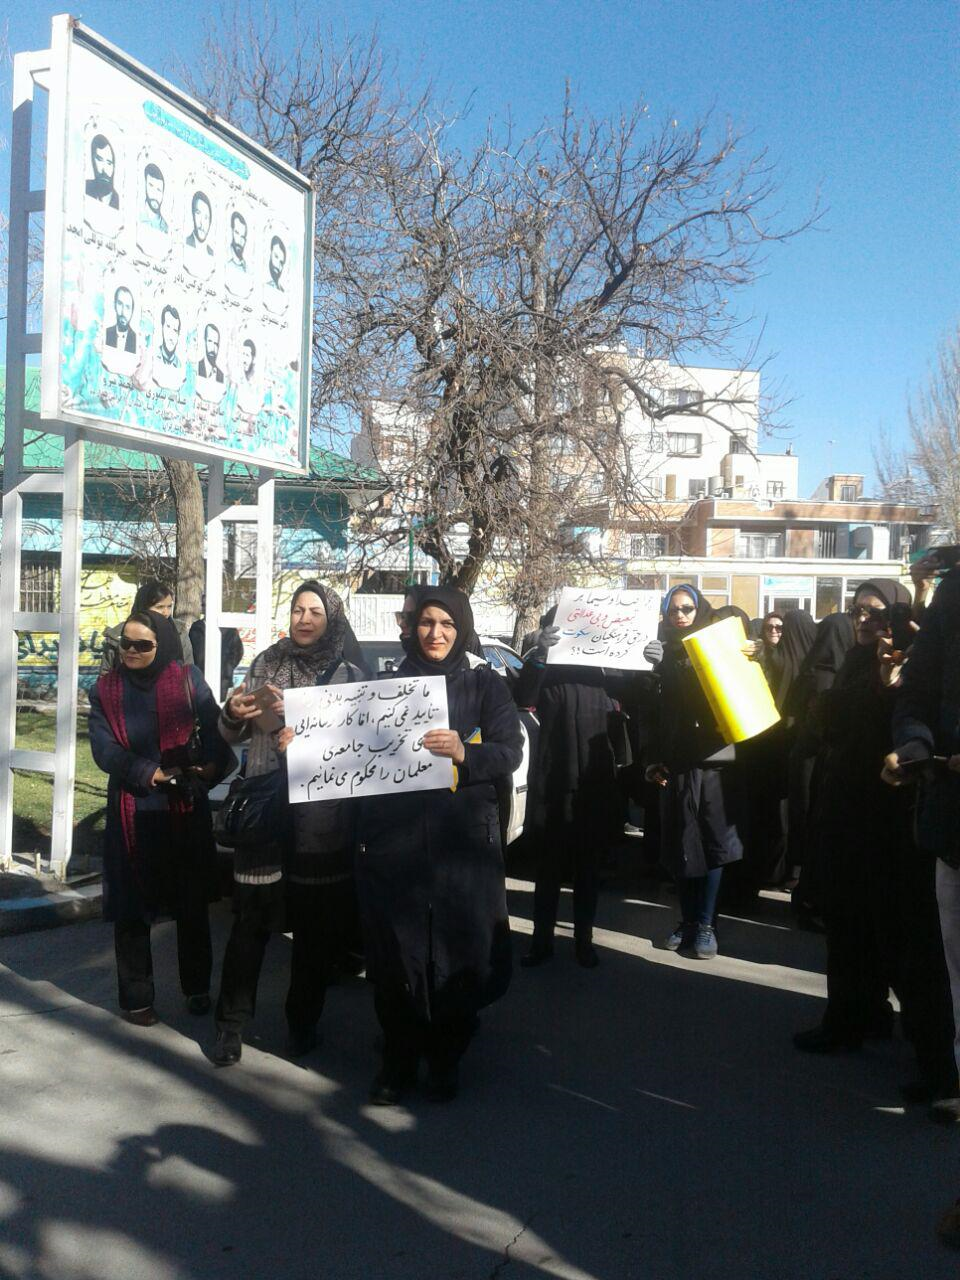 The Massive Protests Across Iran